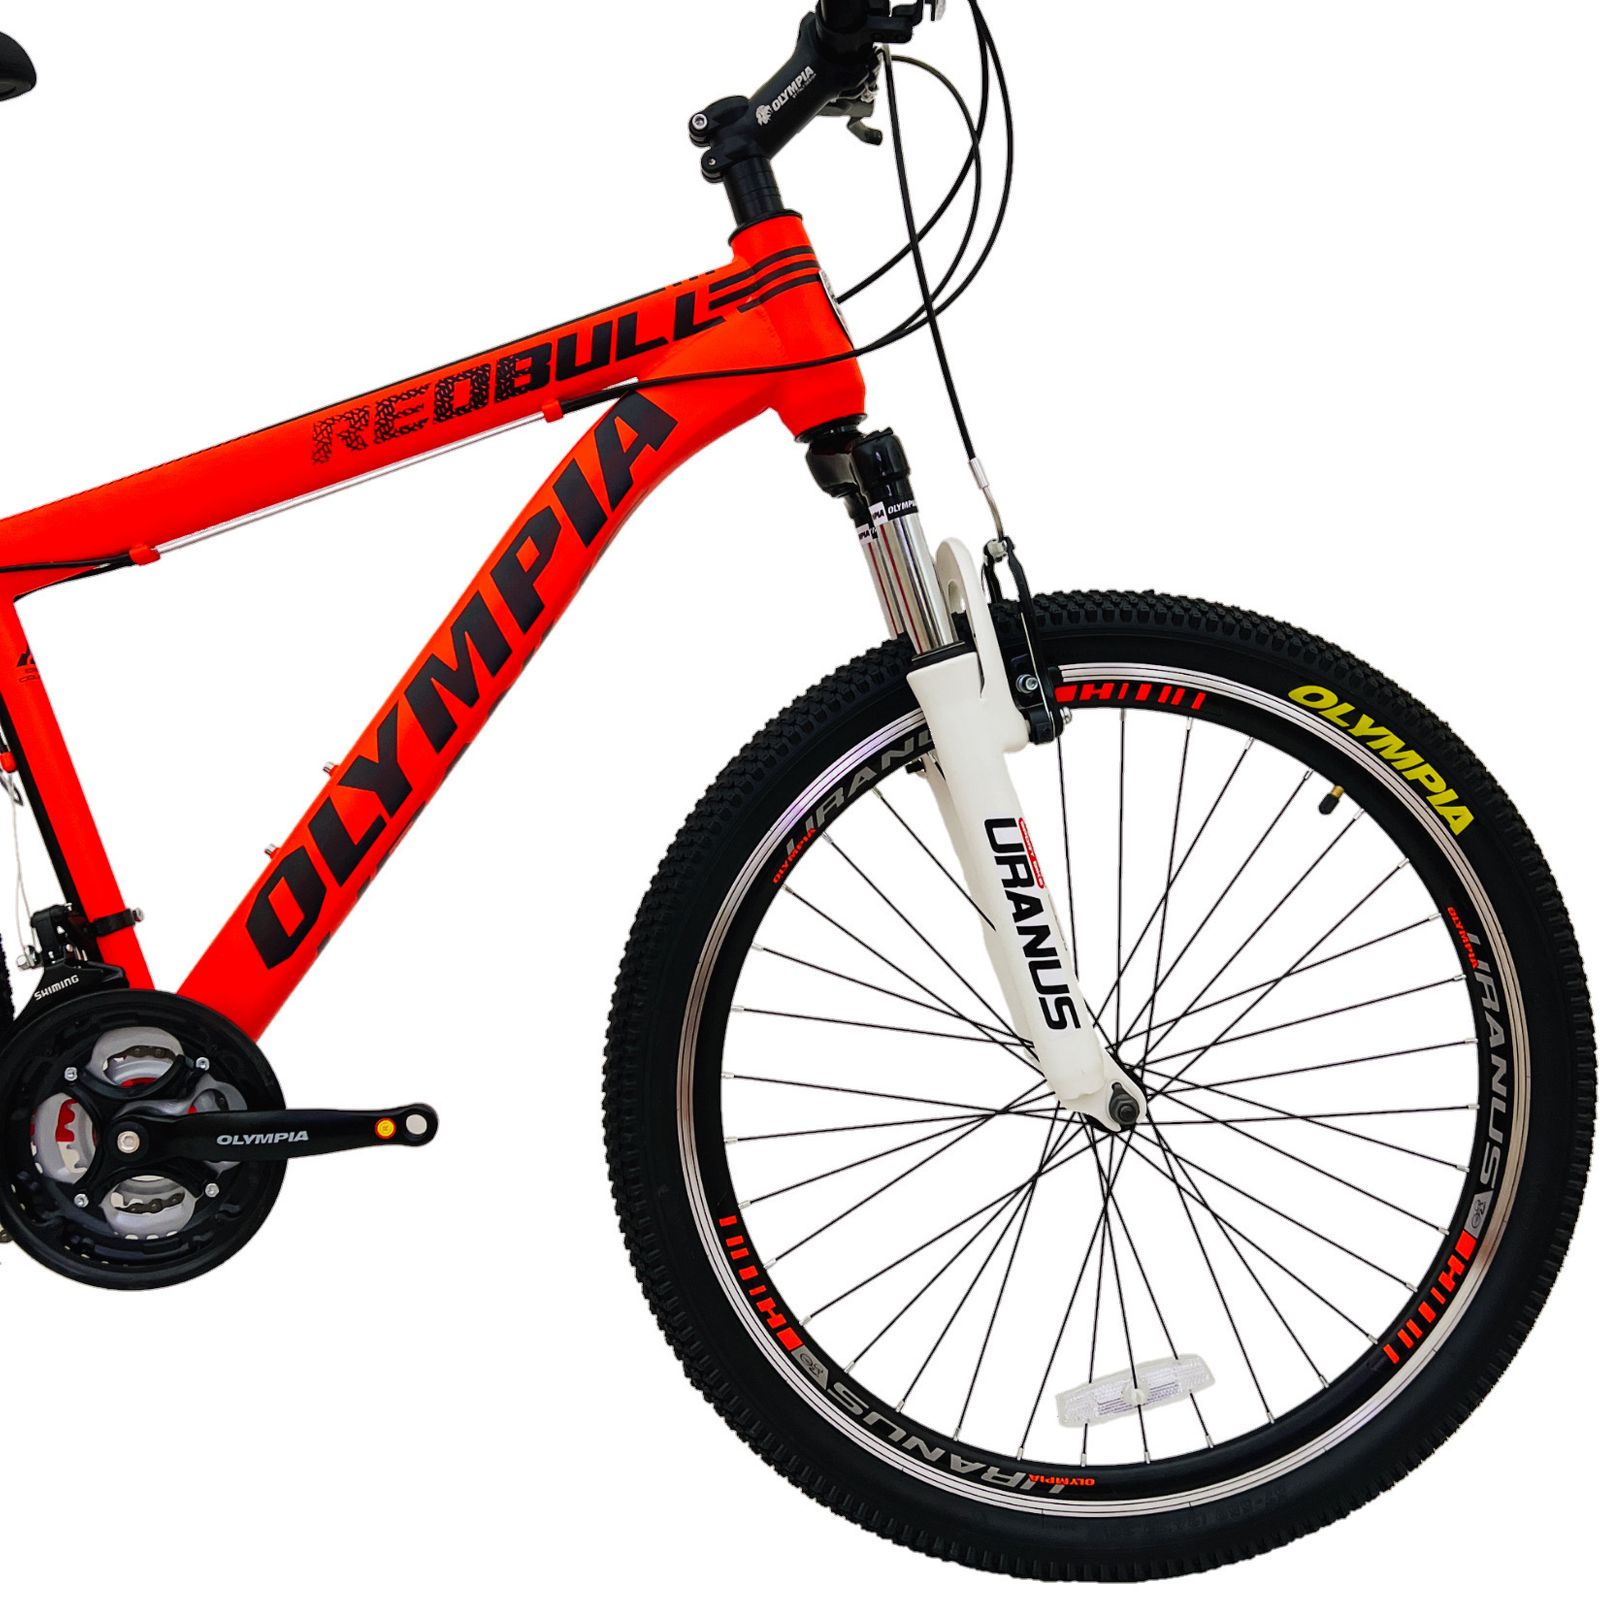 دوچرخه کوهستان المپیا مدل REDBULL کد 4 سایز 26 -  - 3